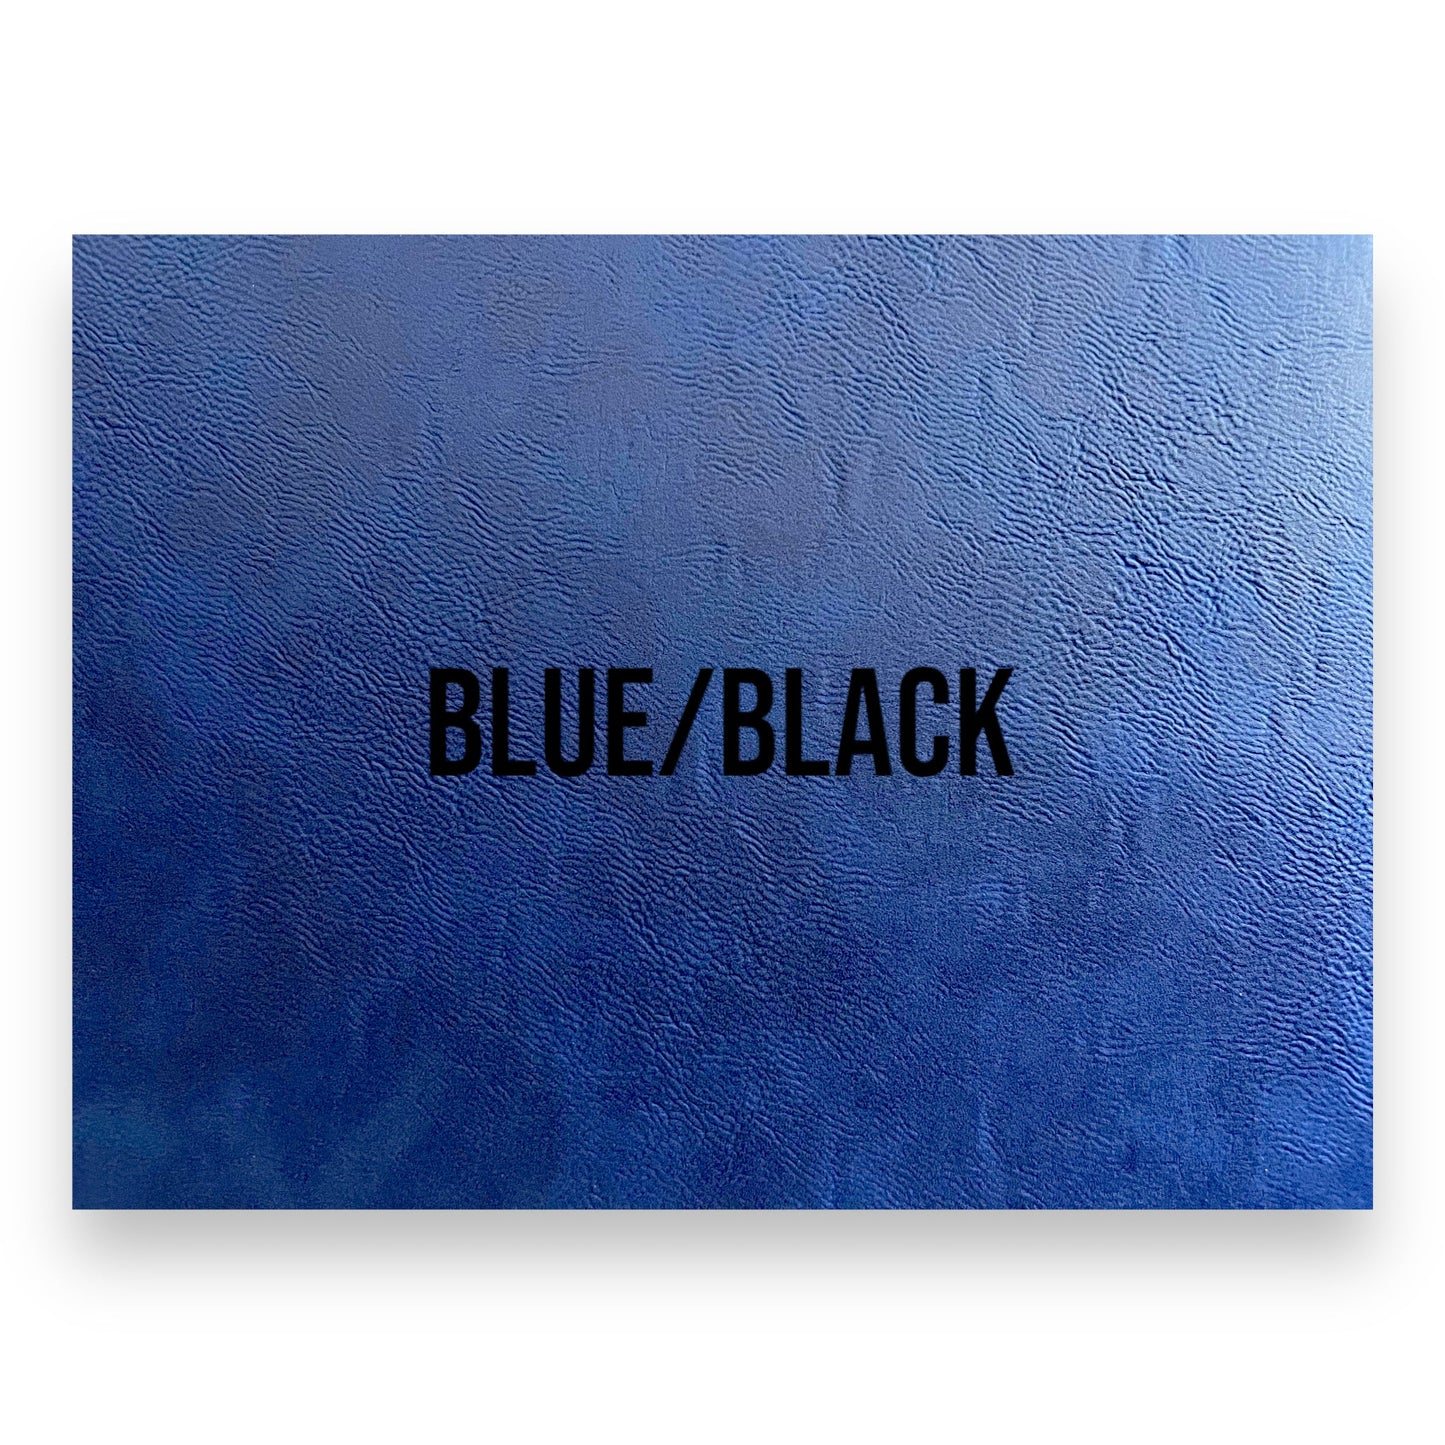 NO ADHESIVE BLUE/BLACK LEATHERETTE SHEET (12"x24")